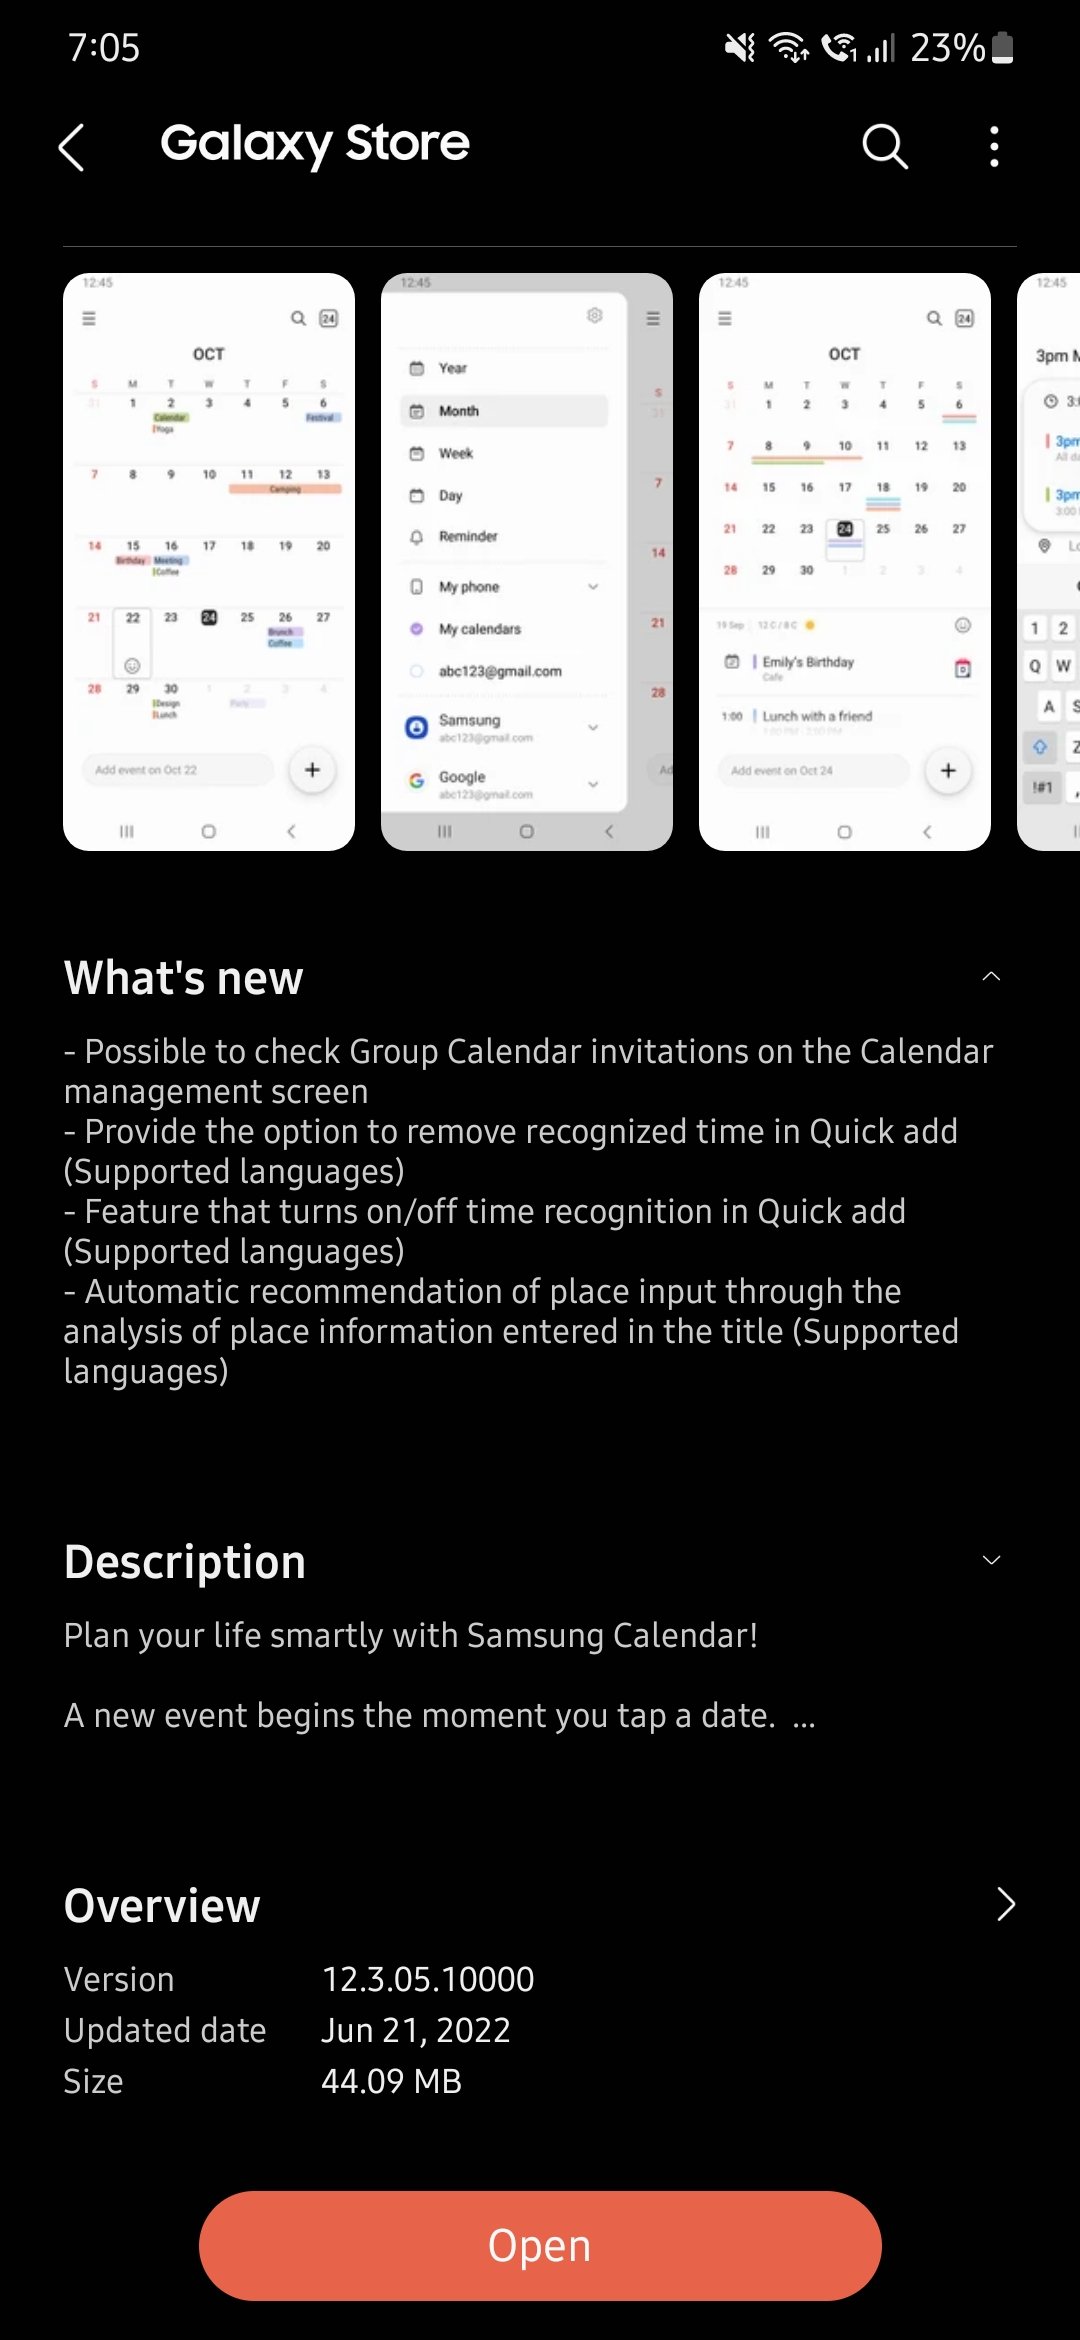 Samsung Calendar app update brings better invitation management, quick